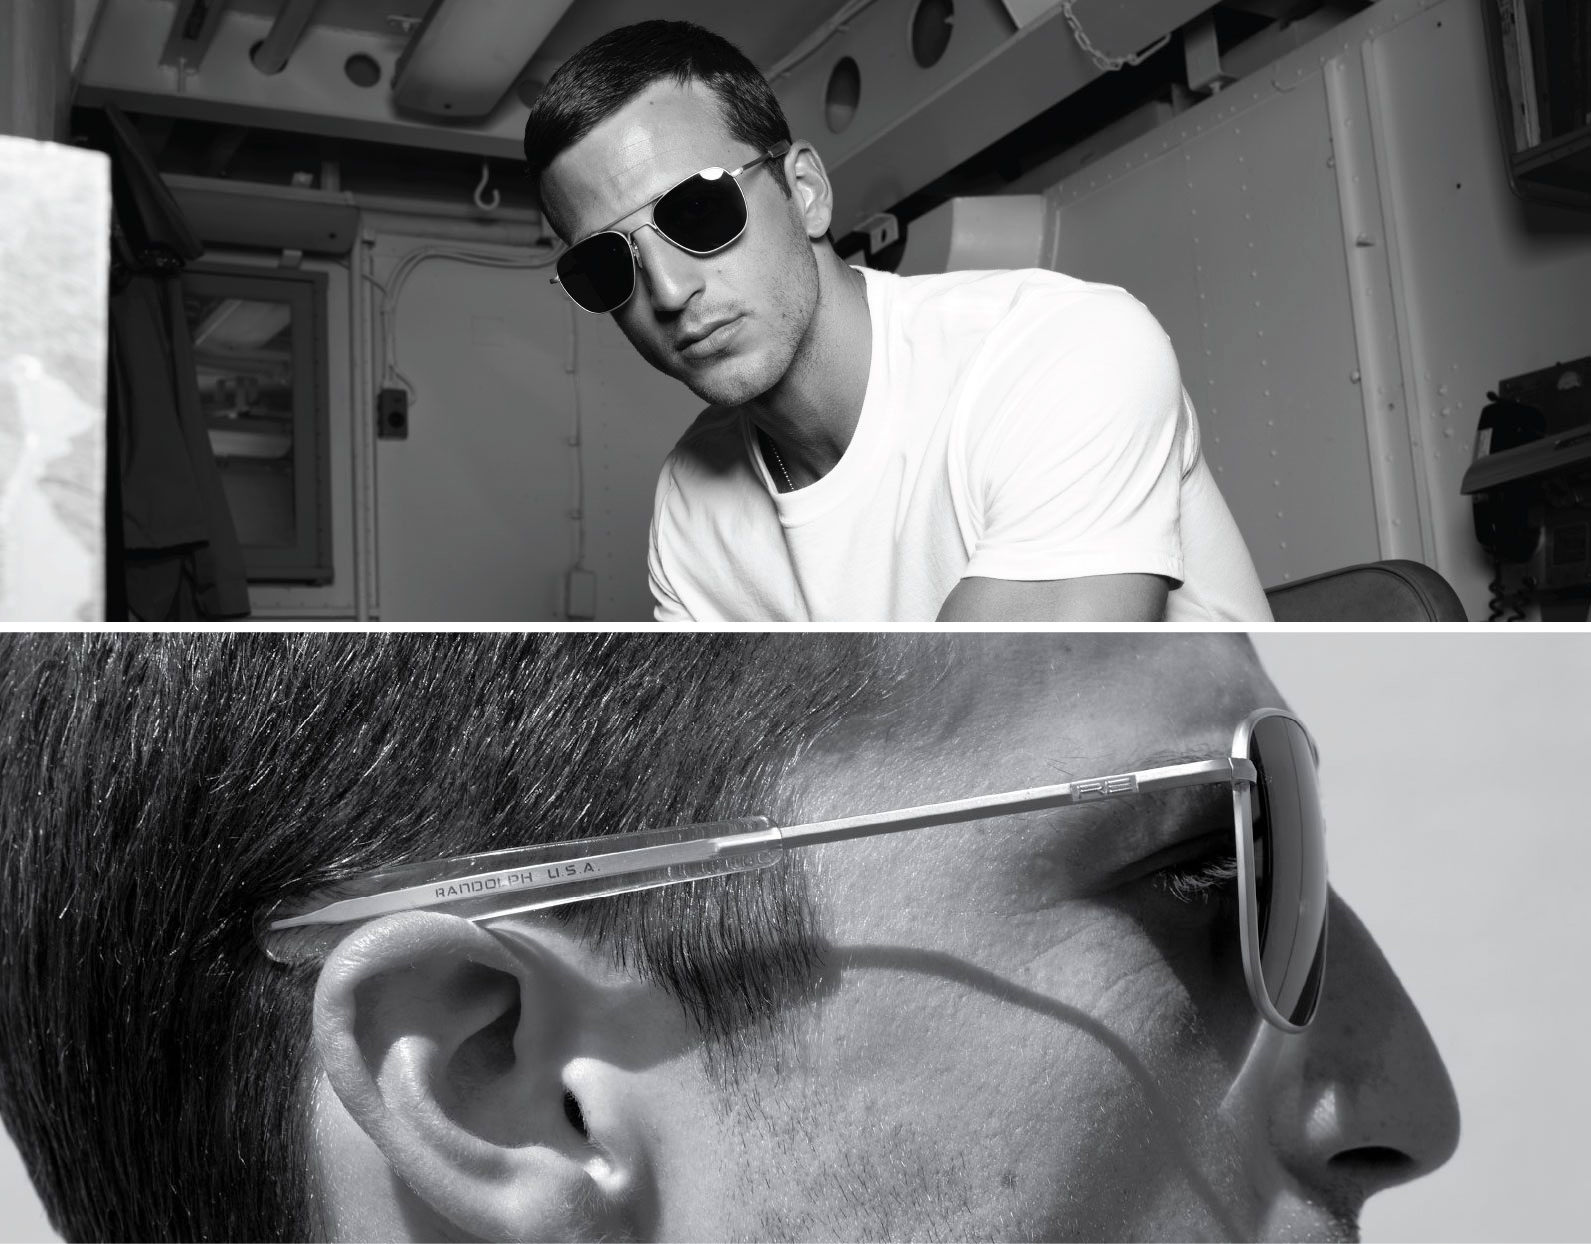 Randolph Aviator Sunglasses Standard Issue To Us Fighter Pilots